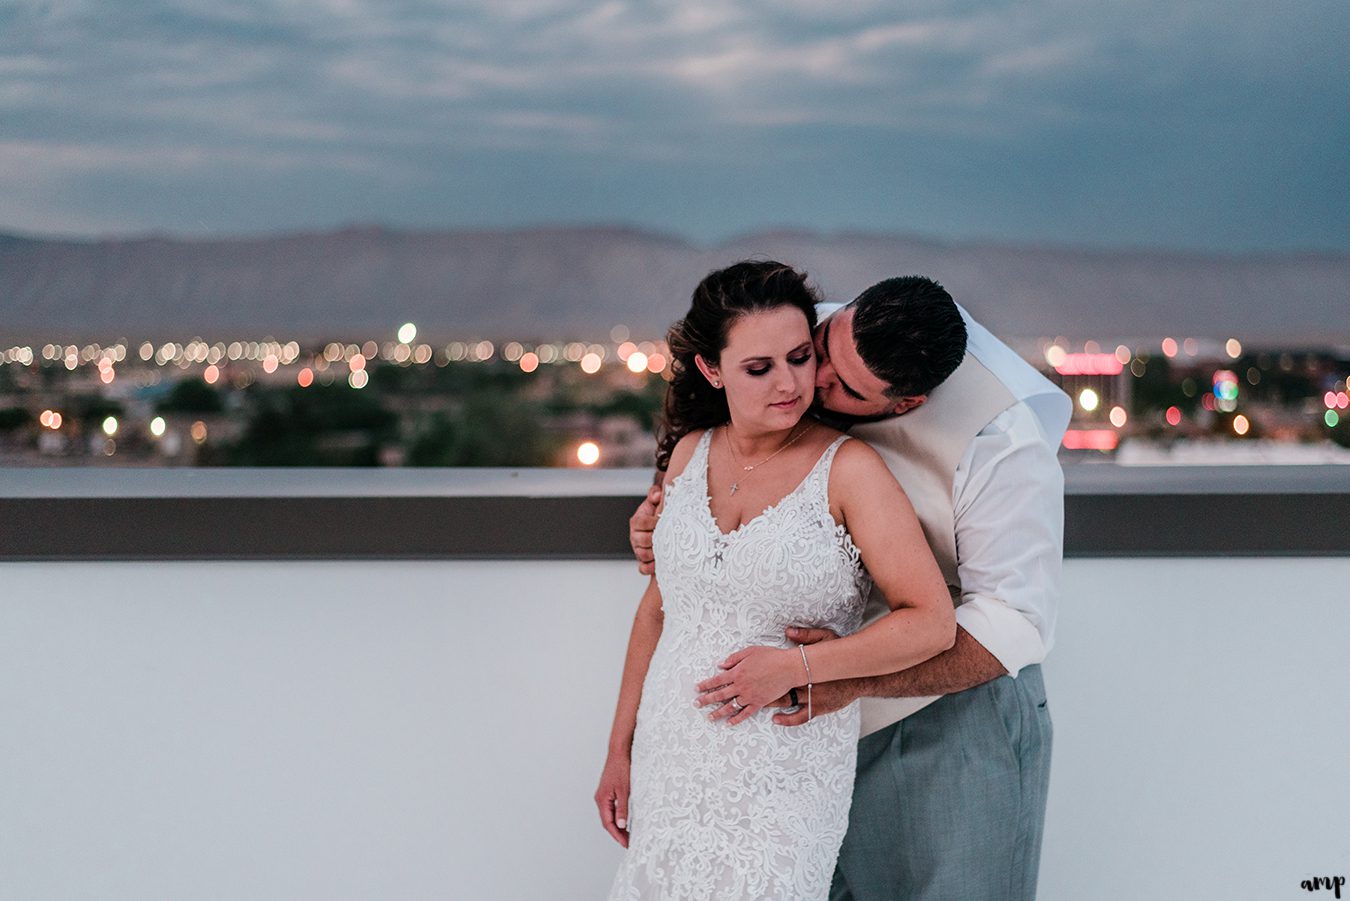 Carlos & Jessica's Doubletree Hotel Wedding | amanda.matilda.photography